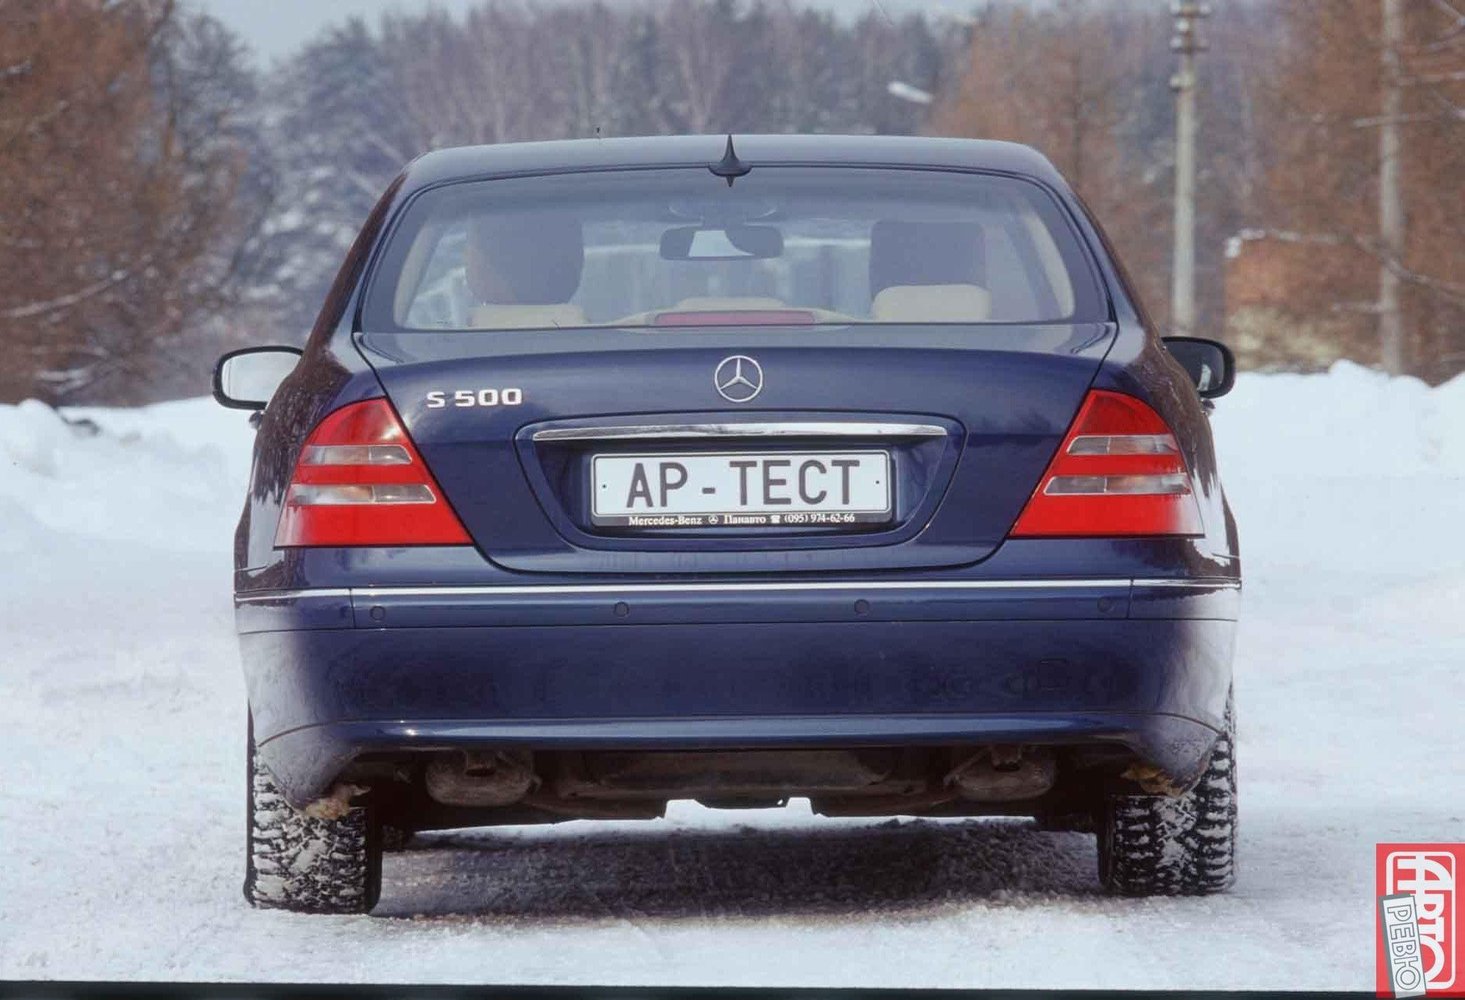 седан Long Mercedes-Benz S-klasse 1998 - 2002г выпуска модификация 3.2 AT (224 л.с.)